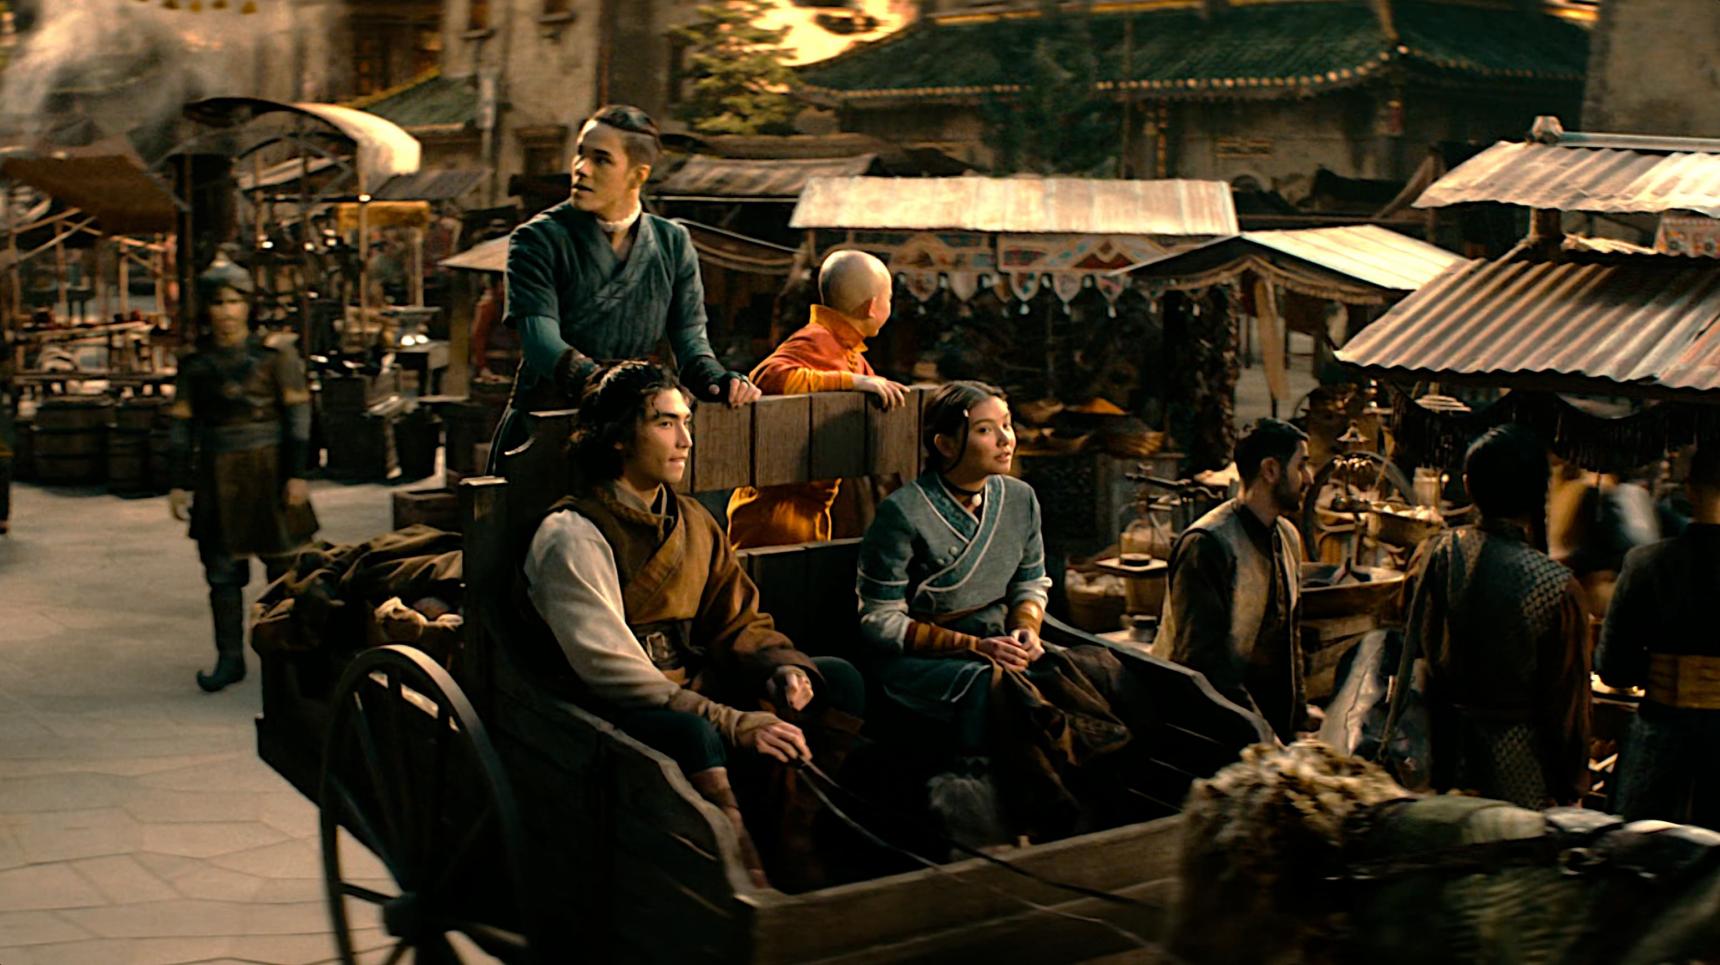 Poster del episodio 3 de Avatar: La leyenda de Aang online